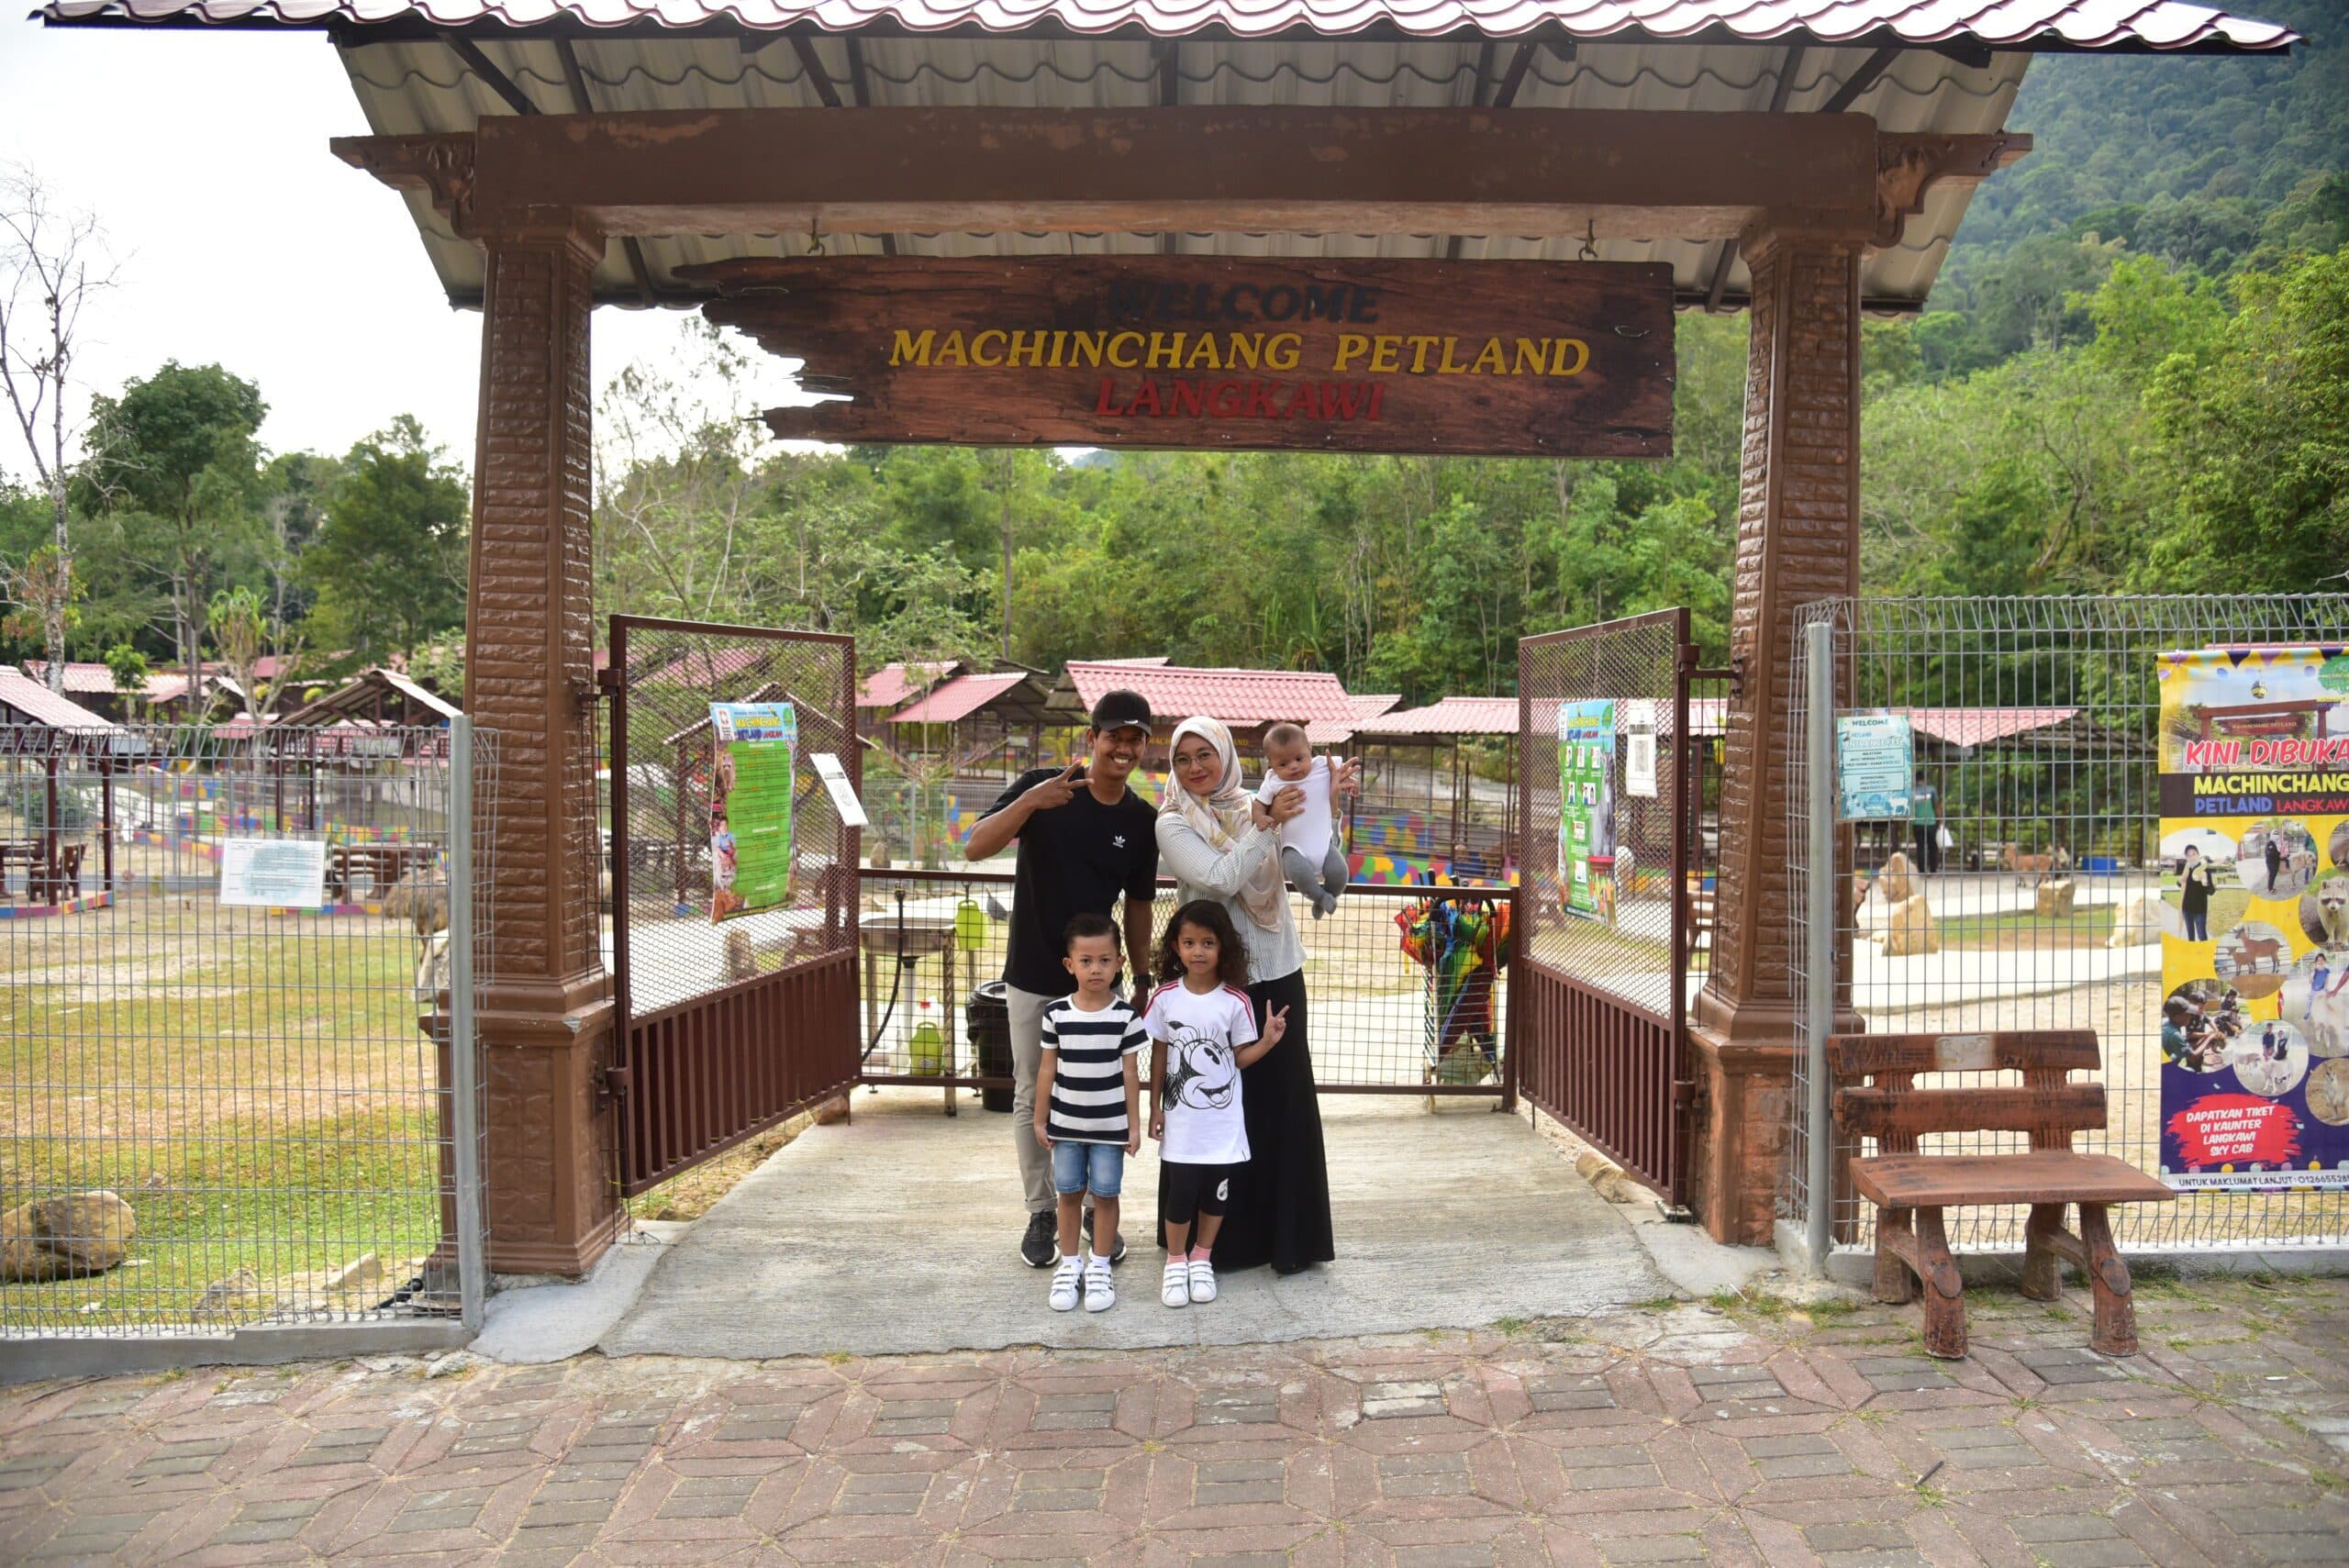 things to do in langkawi - machinchang petland